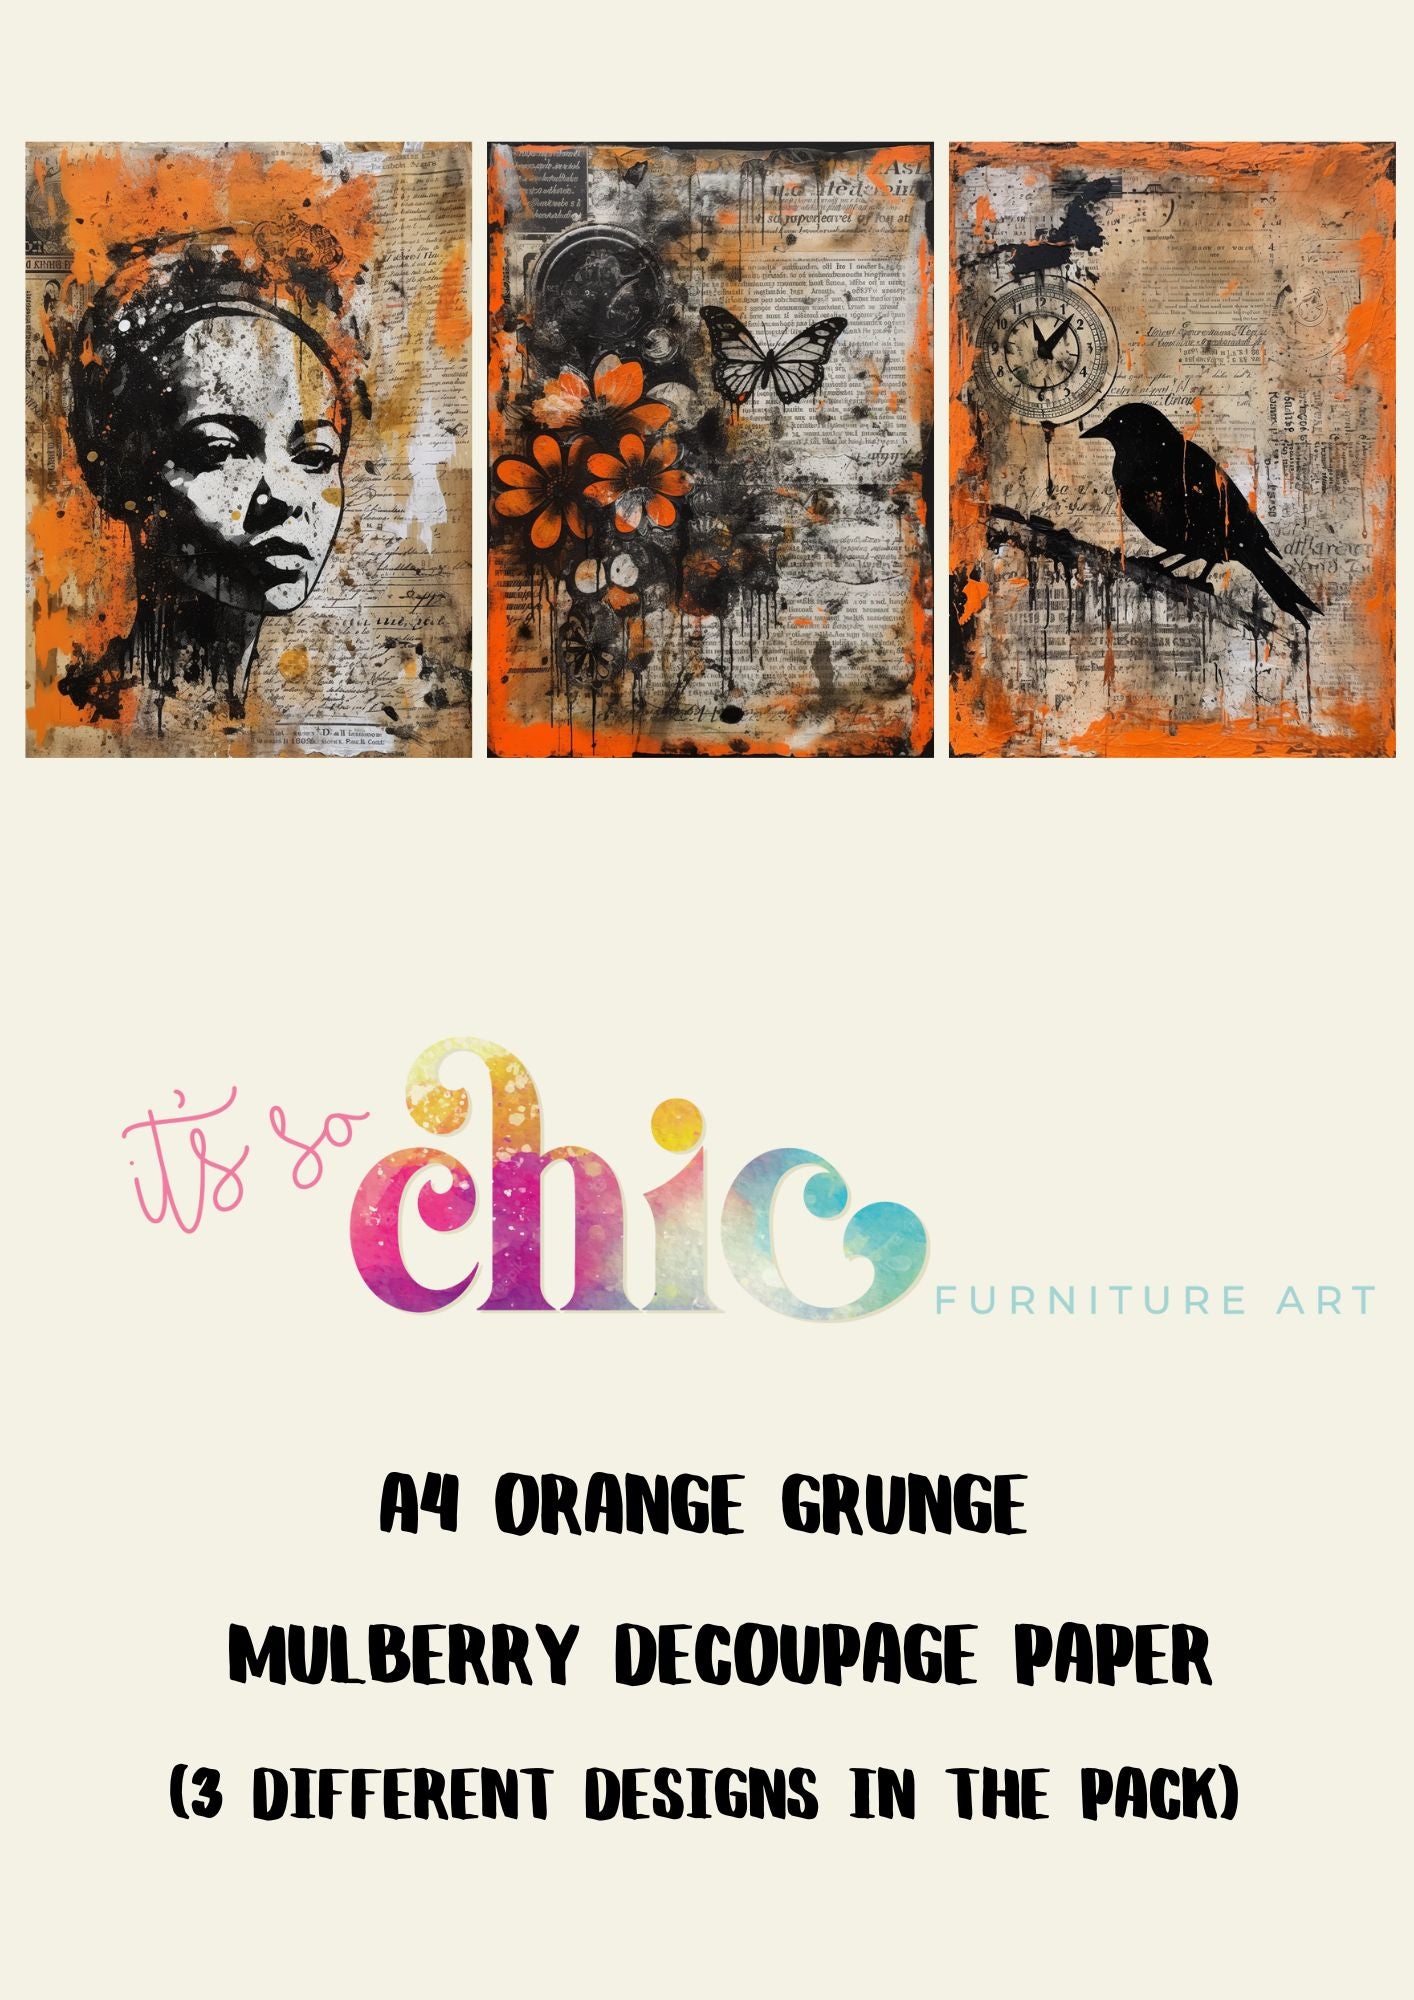 A4 Orange Grunge Mulberry Decoupage Paper